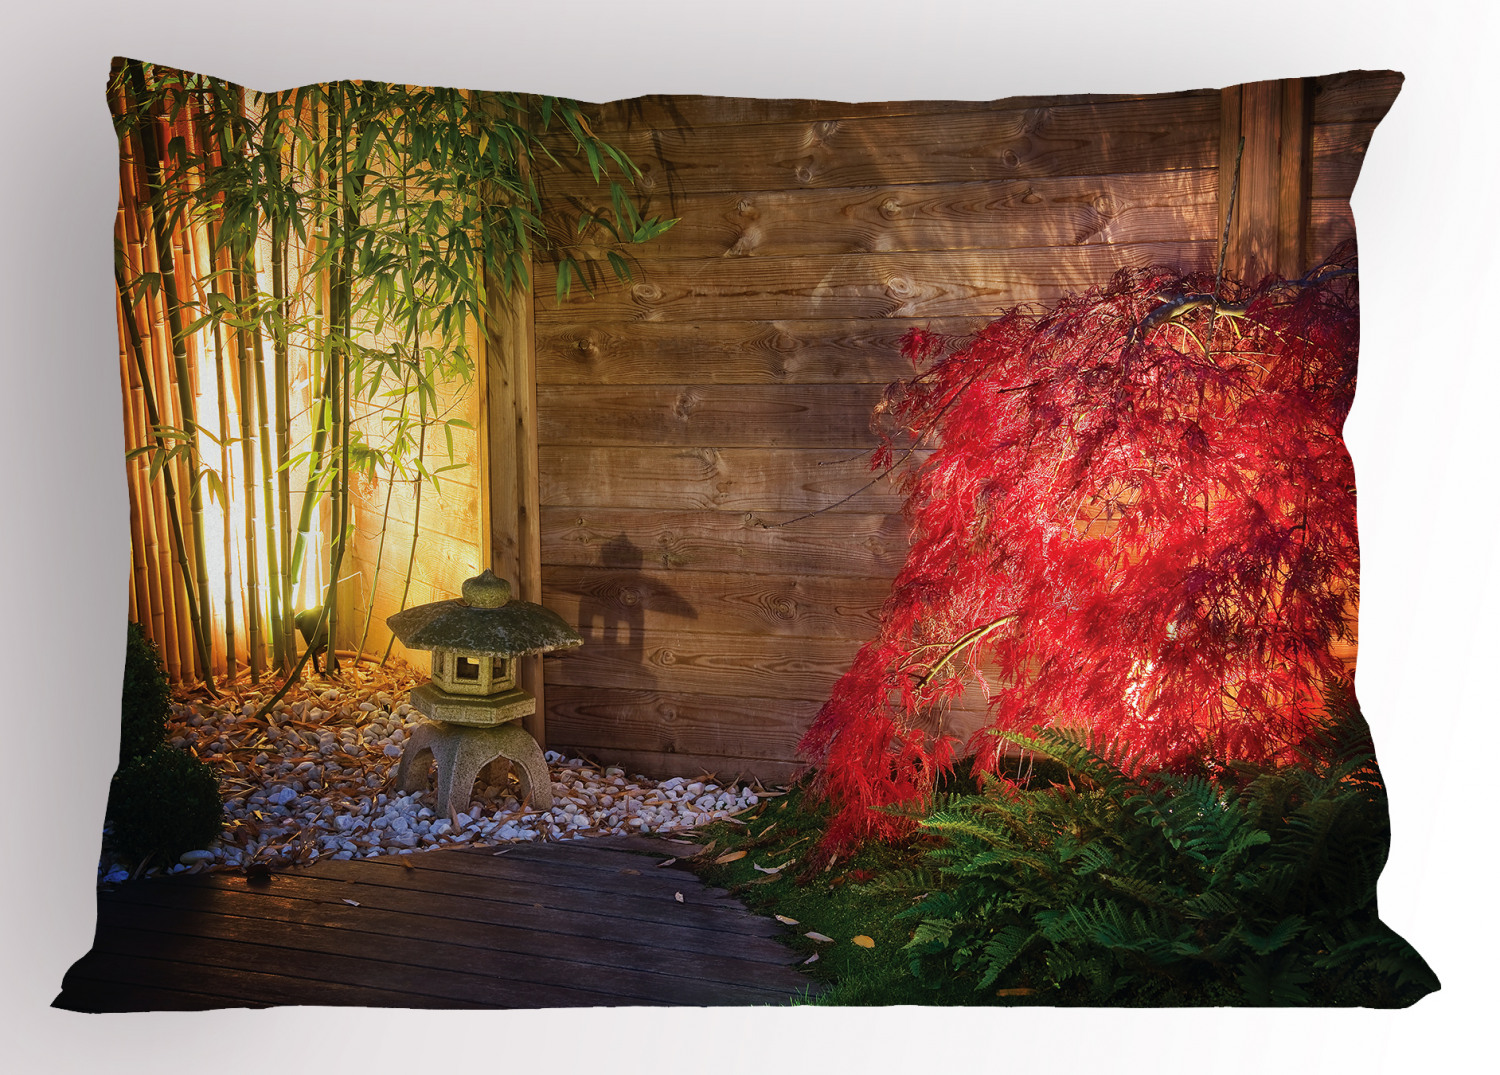 Details about   Garden Art Pillow Sham Decorative Pillowcase 3 Sizes for Bedroom Decor 